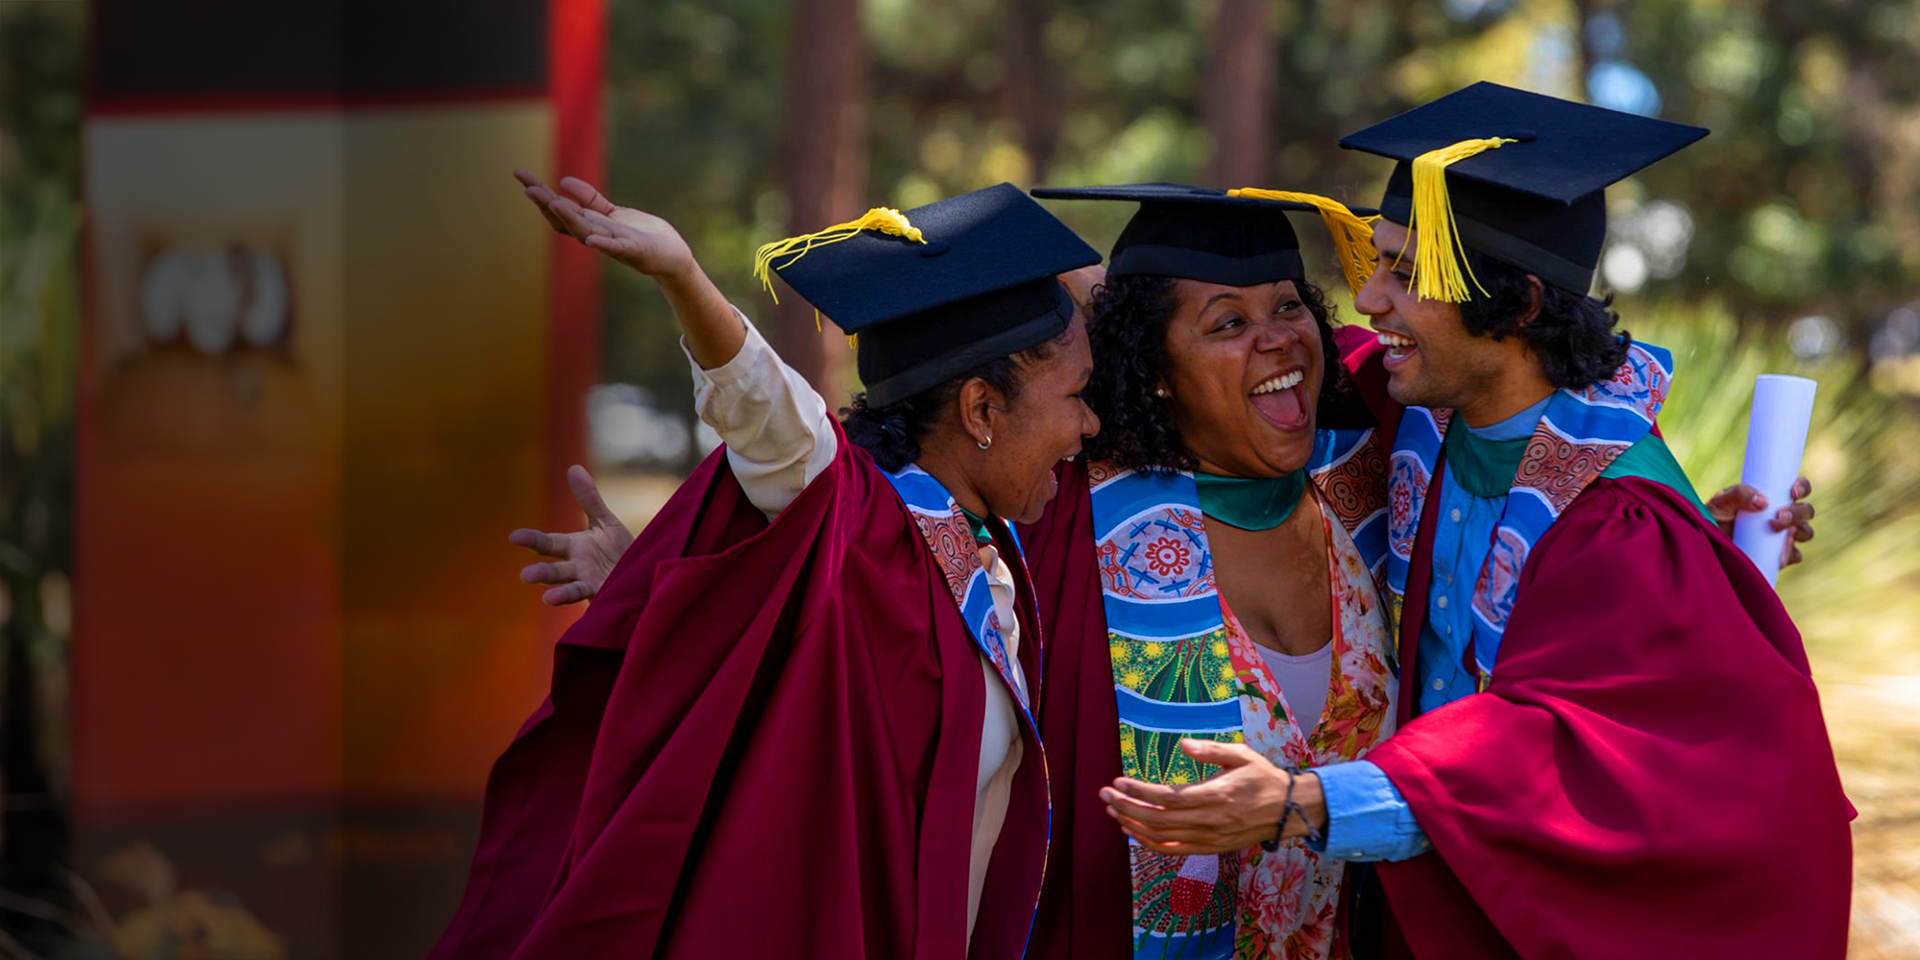 Three graduating indigenous Australians celebrating in academic regalia clothing